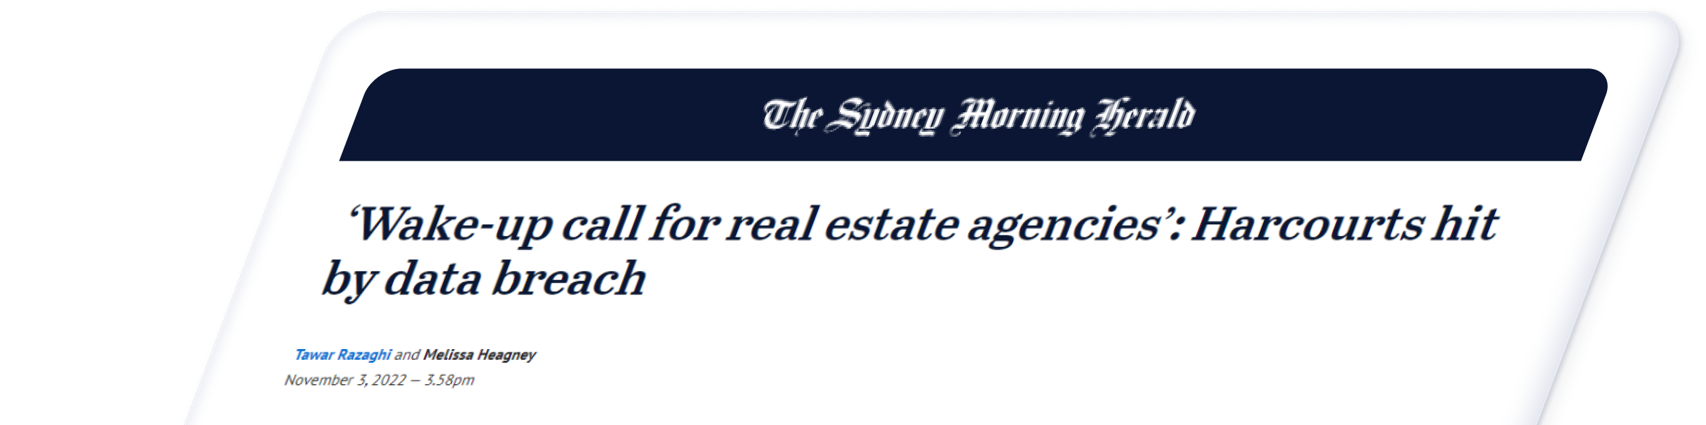 Online News Headline from the Sydney Morning Hearld News.